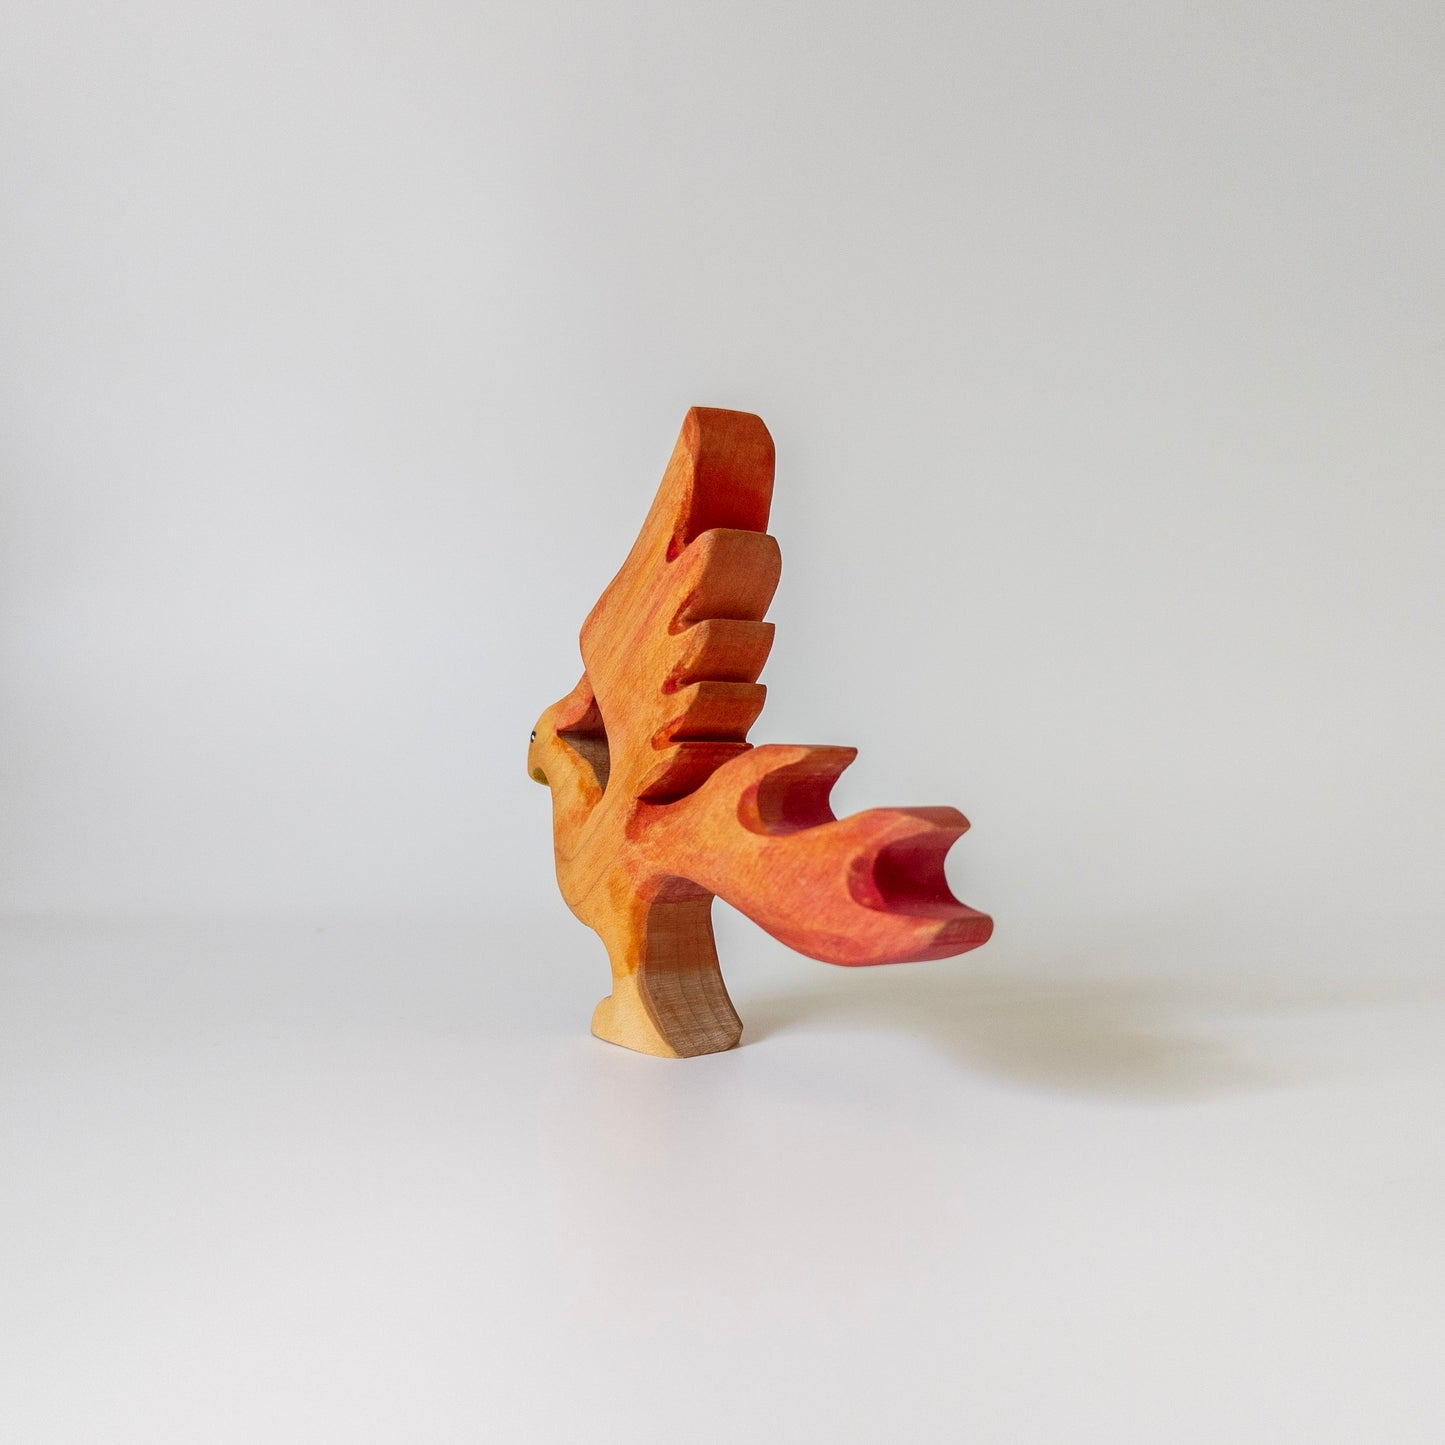 Phoenix Wooden Toy